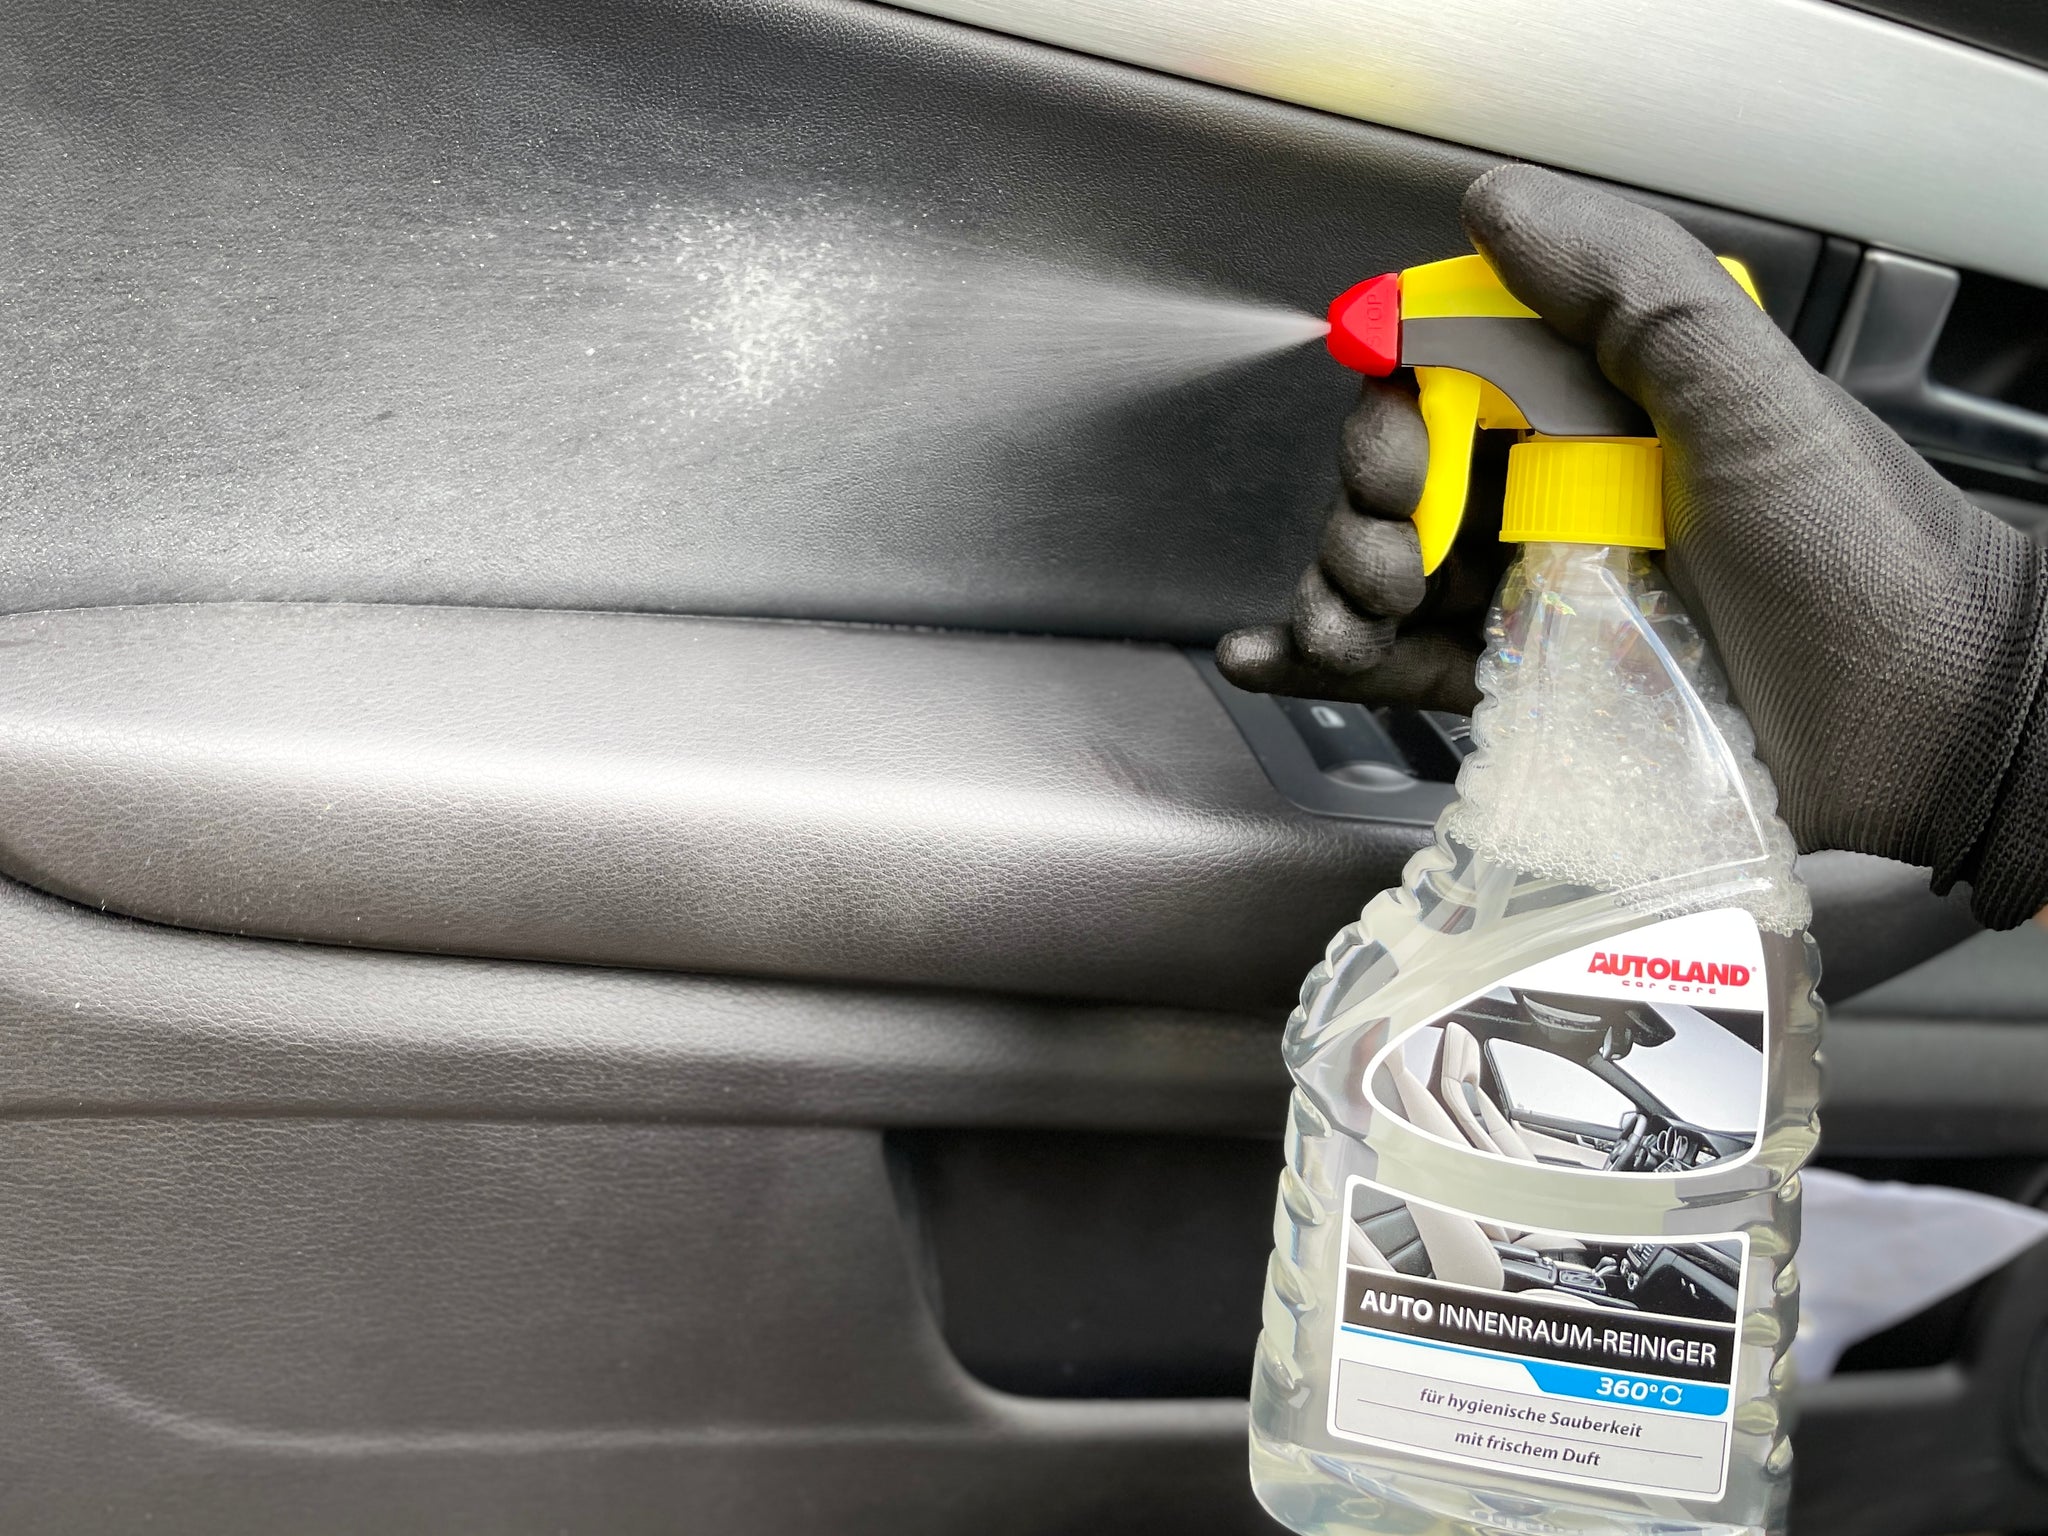 Auto Innenraumreiniger  Interior Cleaner Autoland Car Care 670 ml